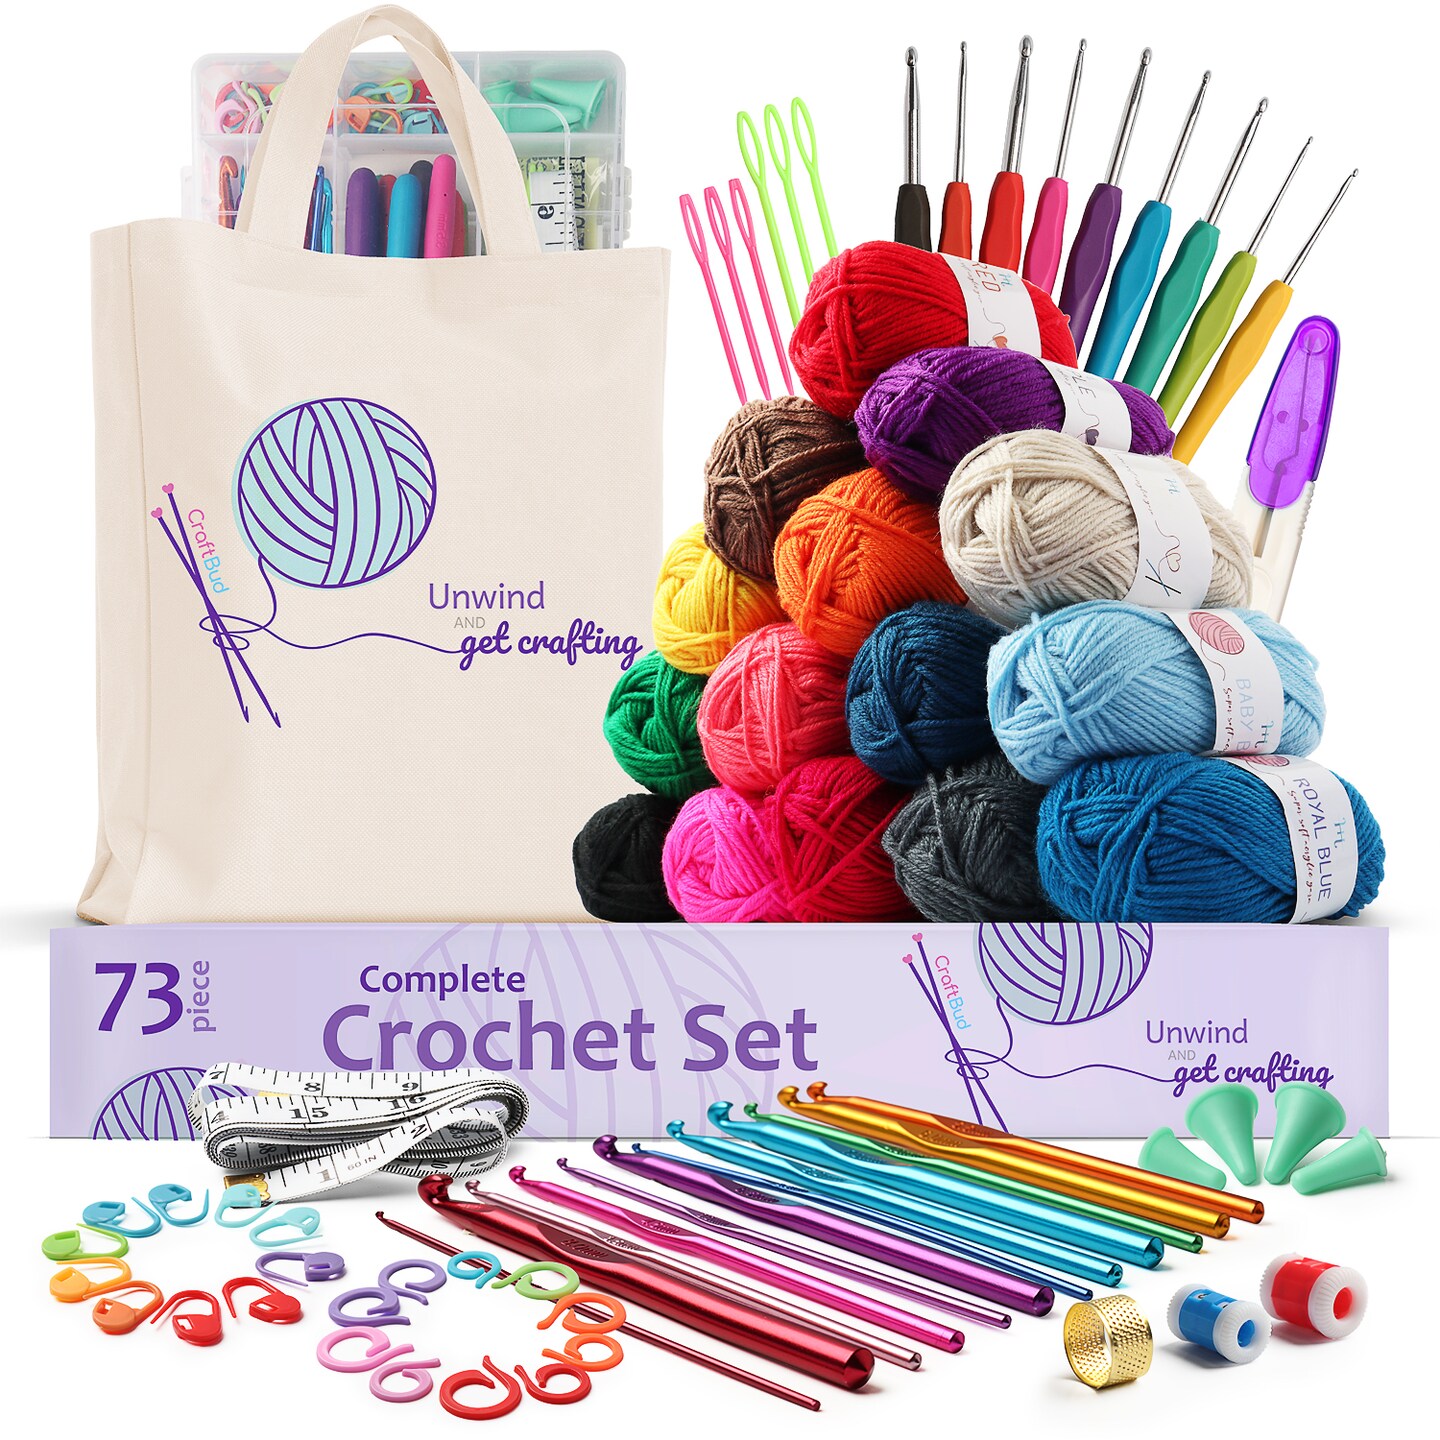 Handmade Yarn Boxes - Knitting / Crochet Notion